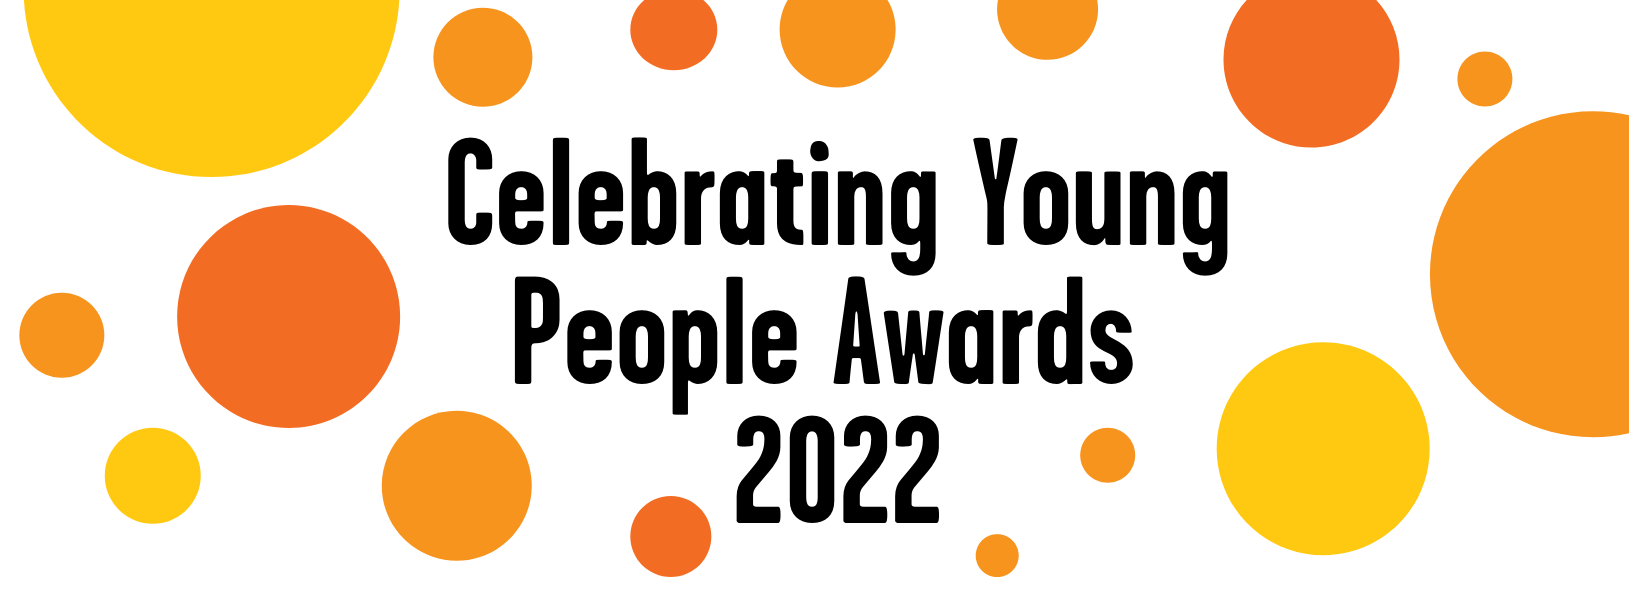 Celebrating Young People Awards